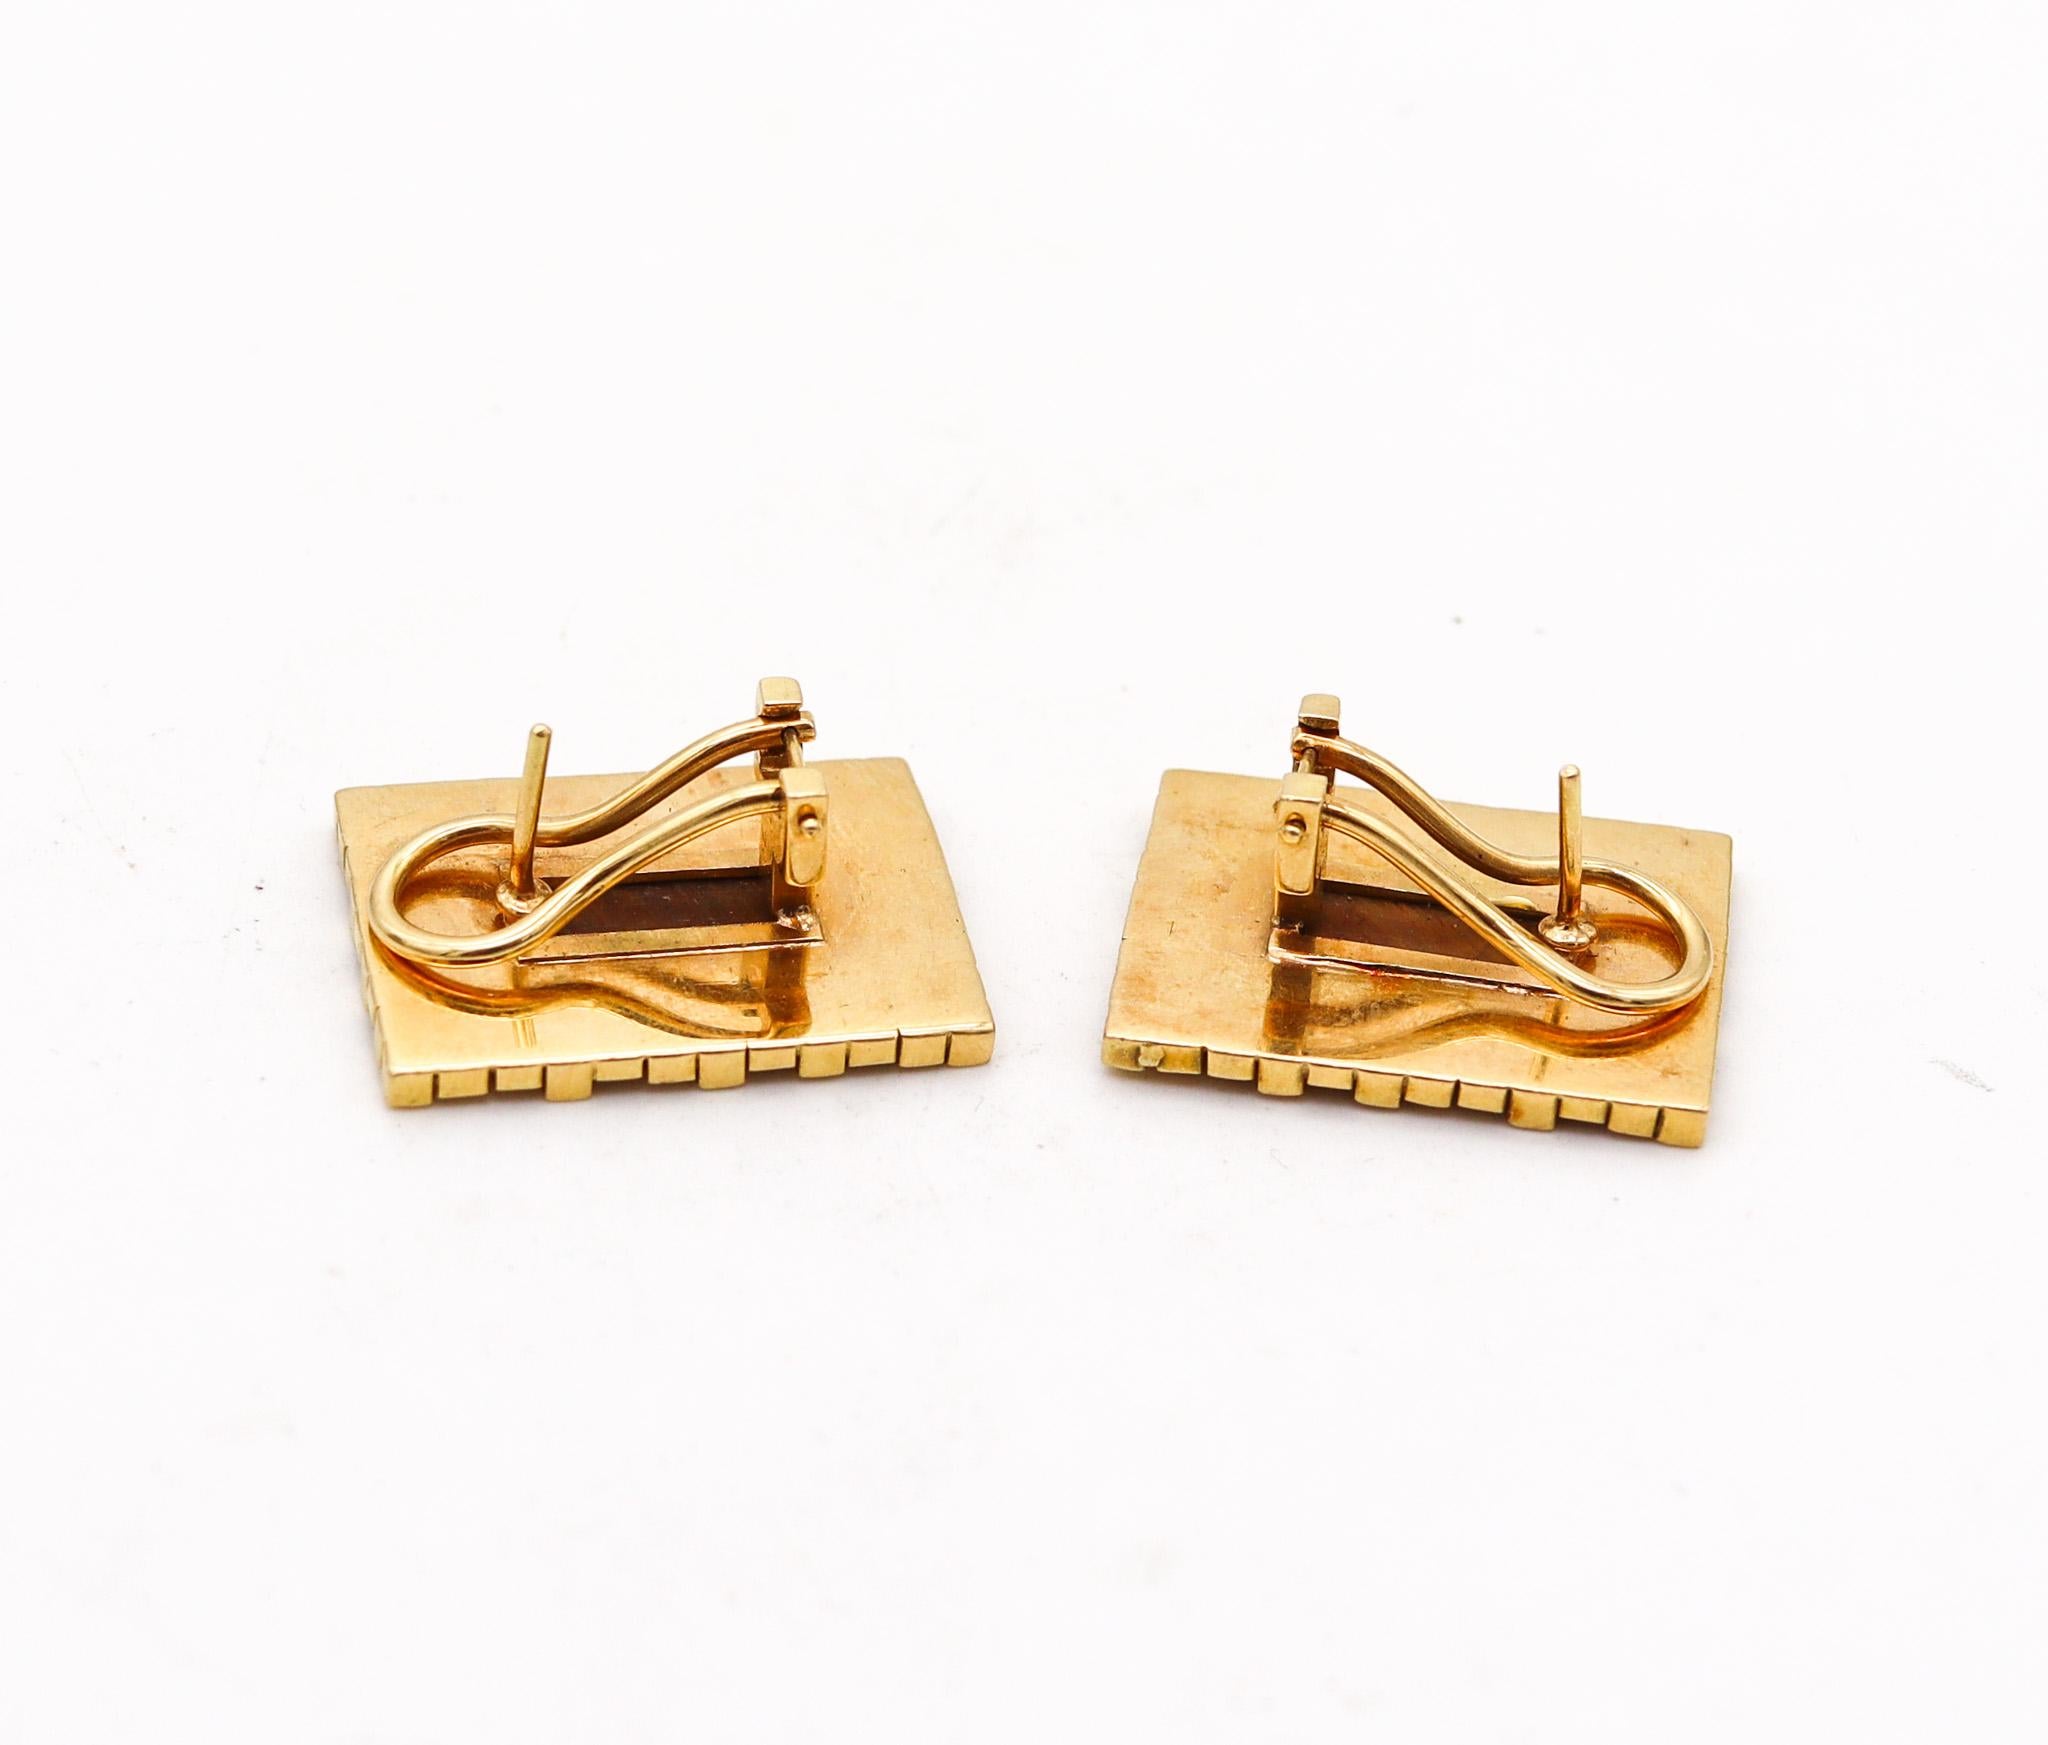 Cabochon Spritzer & Furhmann 1960 Modernist Geometric Earrings 18Kt Gold With Tiger's Eye For Sale